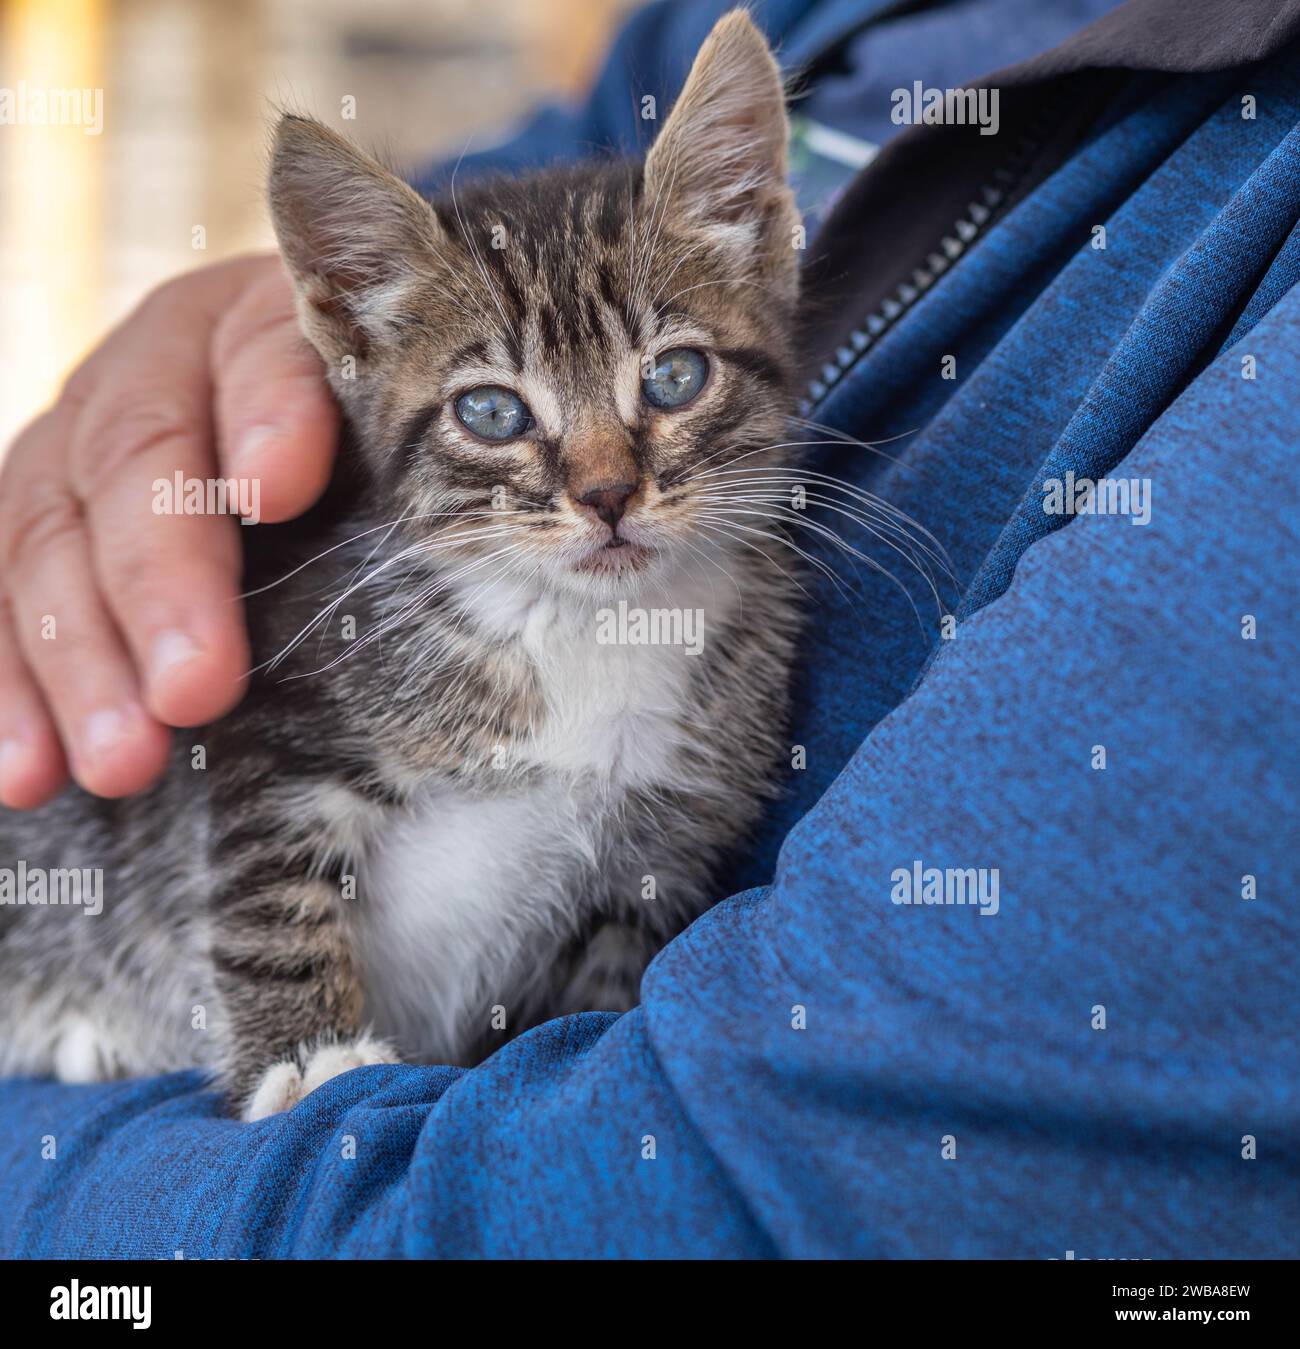 person stroking a friendly tabby kitten Stock Photo